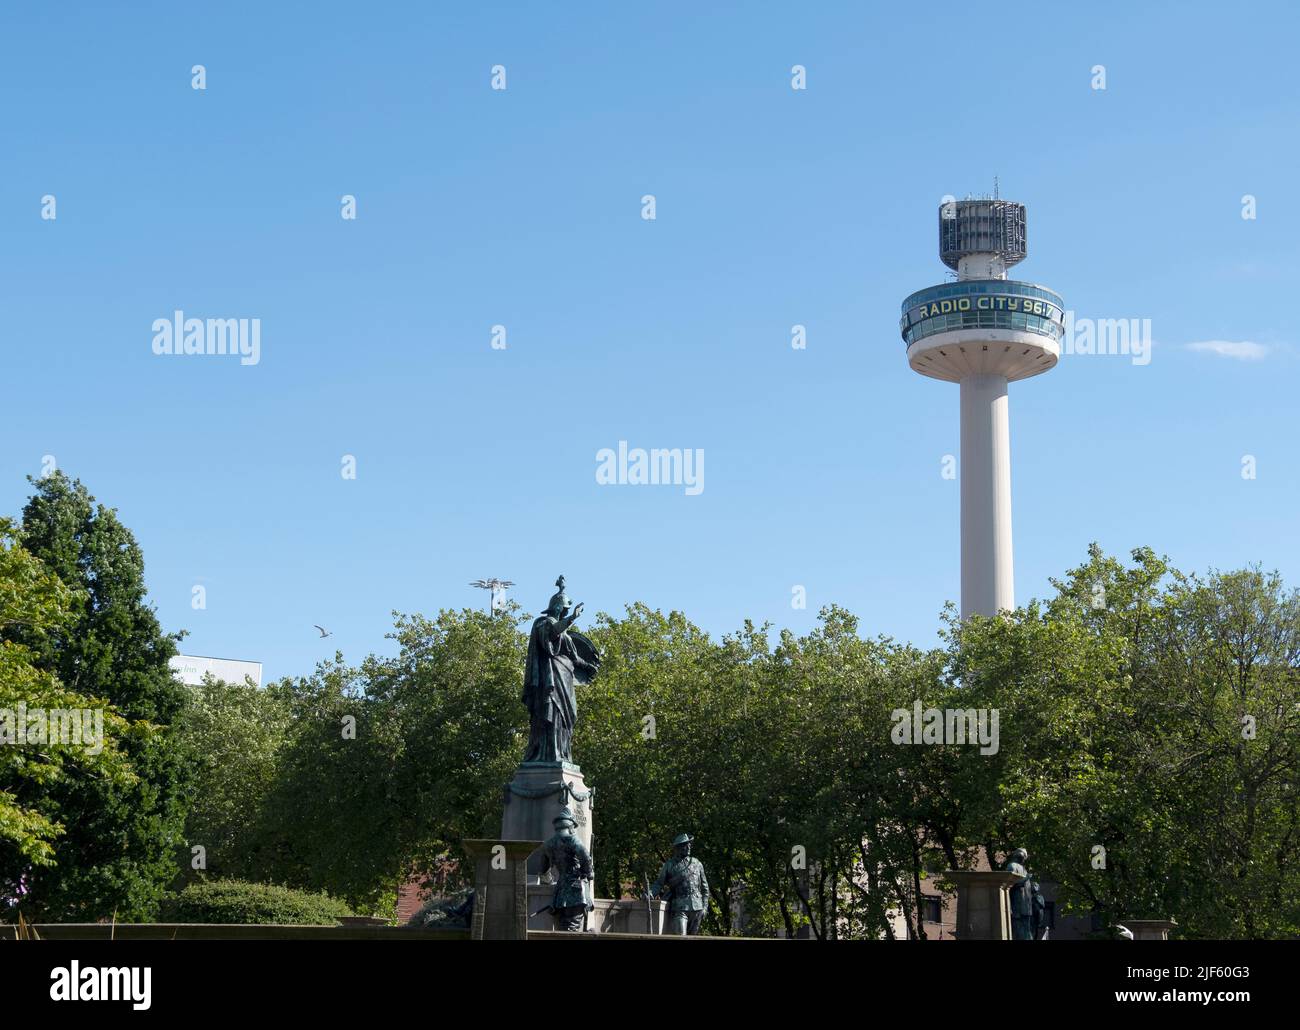 Radio City Tower Liverpool England UK Stock Photo